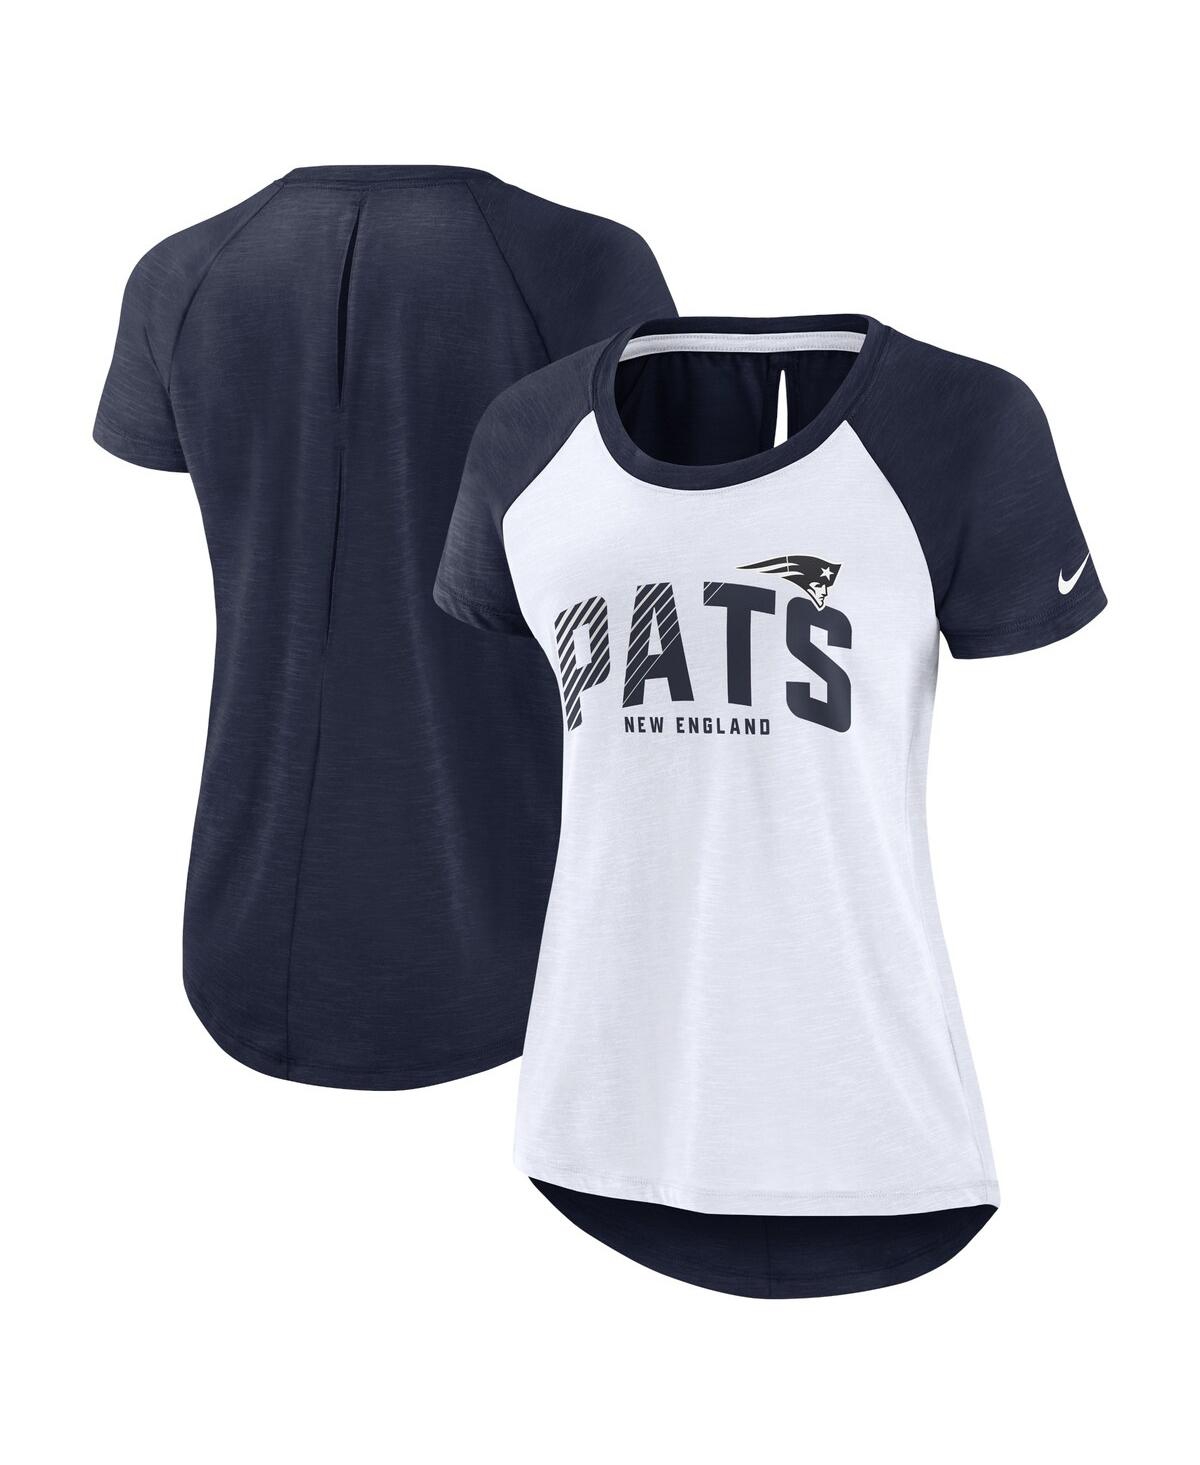 Women's Nike White, Navy New England Patriots Back Slit Lightweight Fashion T-shirt - White, Heather Scarlet